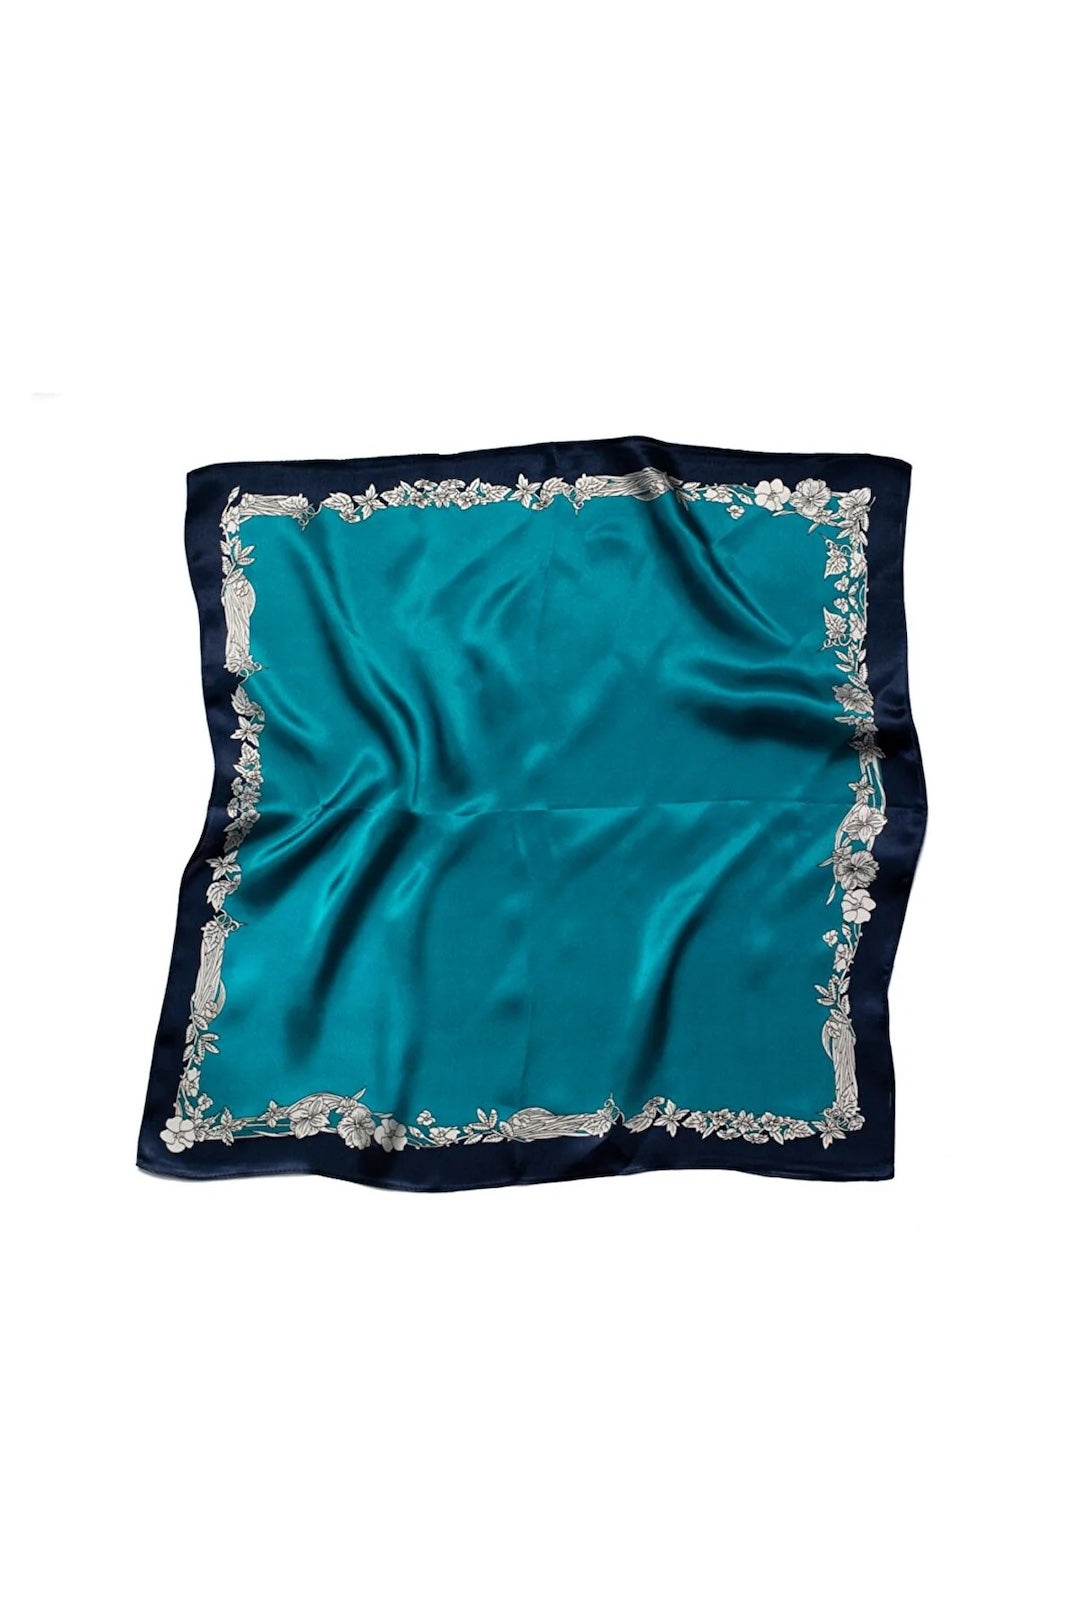 Square Silk Bandana 50cmx50cm - Teal Floral